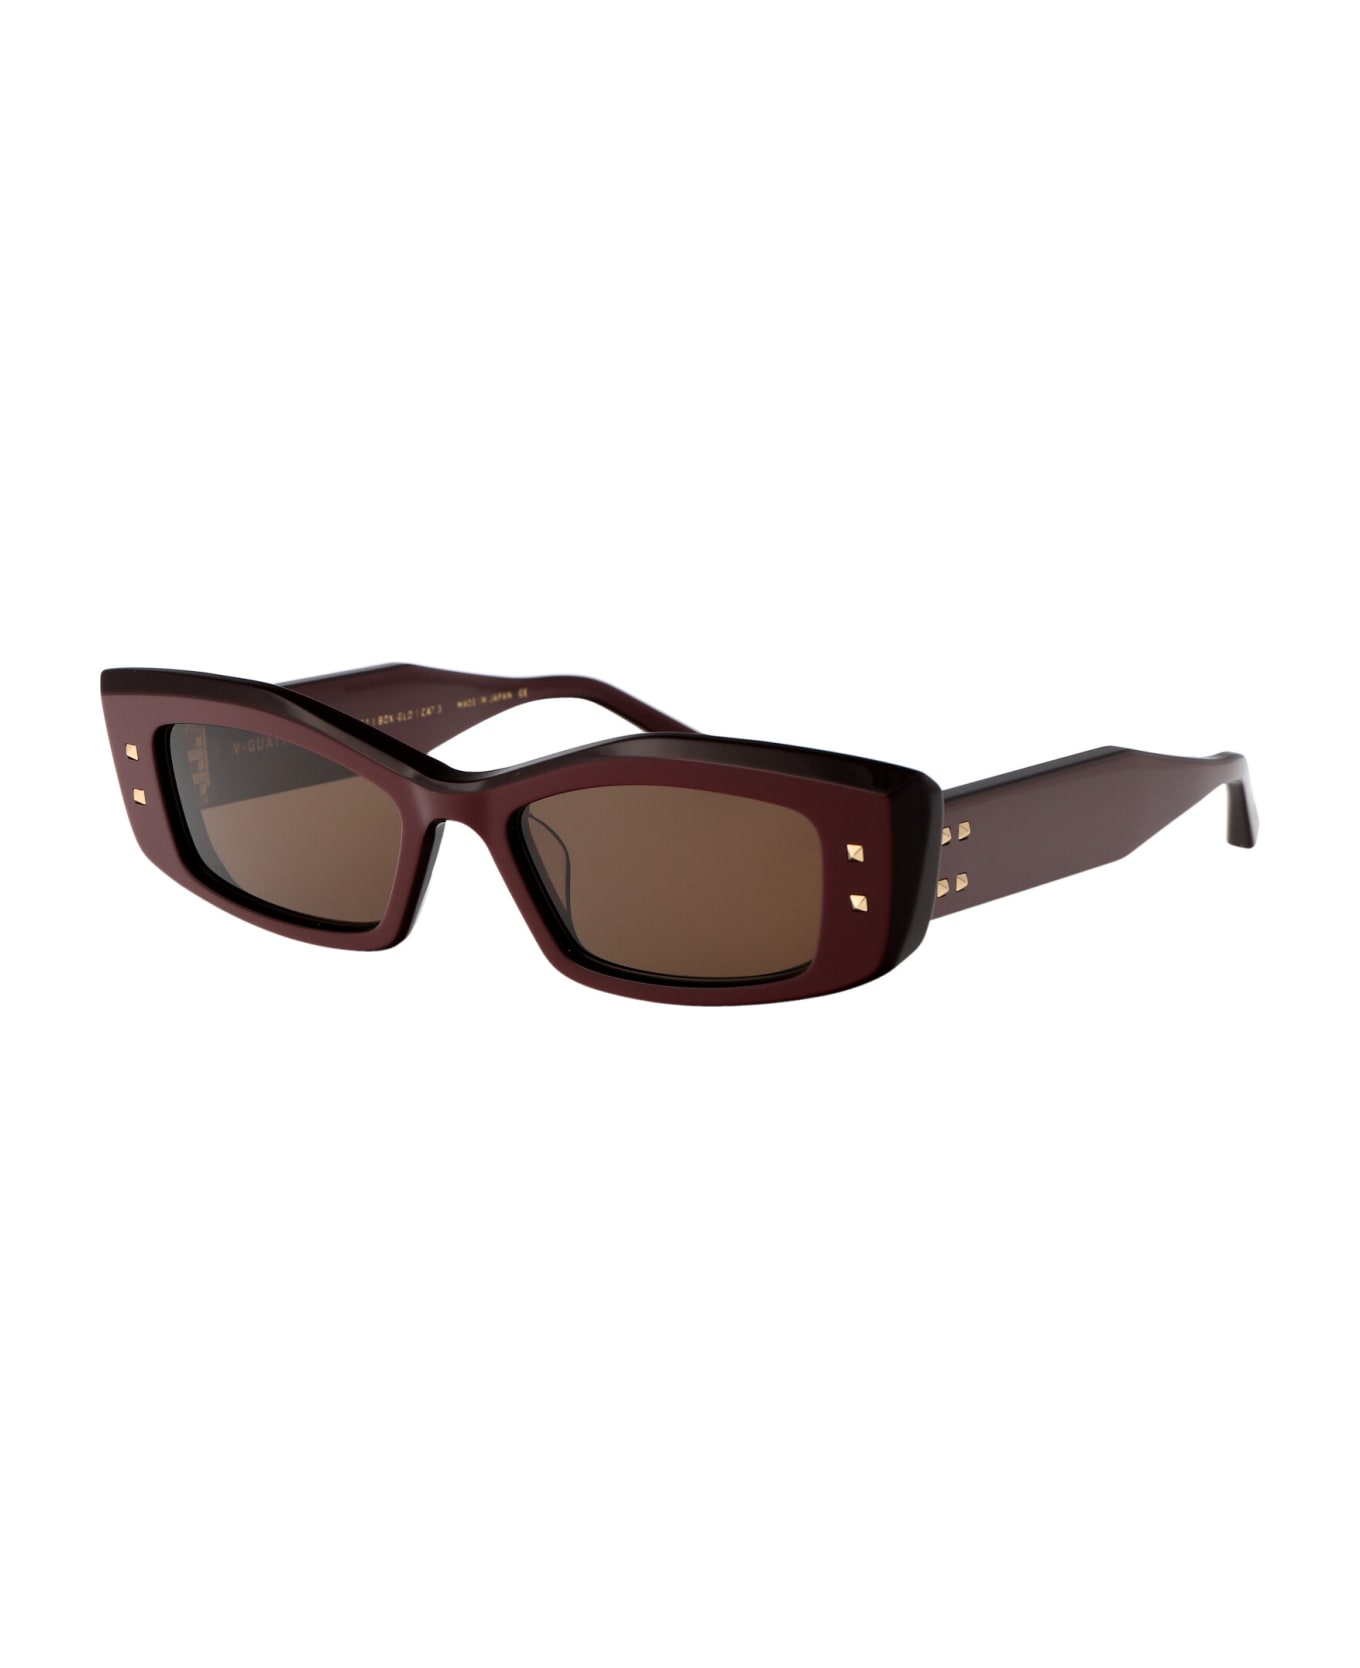 Valentino Eyewear V - Quattro Sunglasses - 109balenciaga hybrid sunglasses